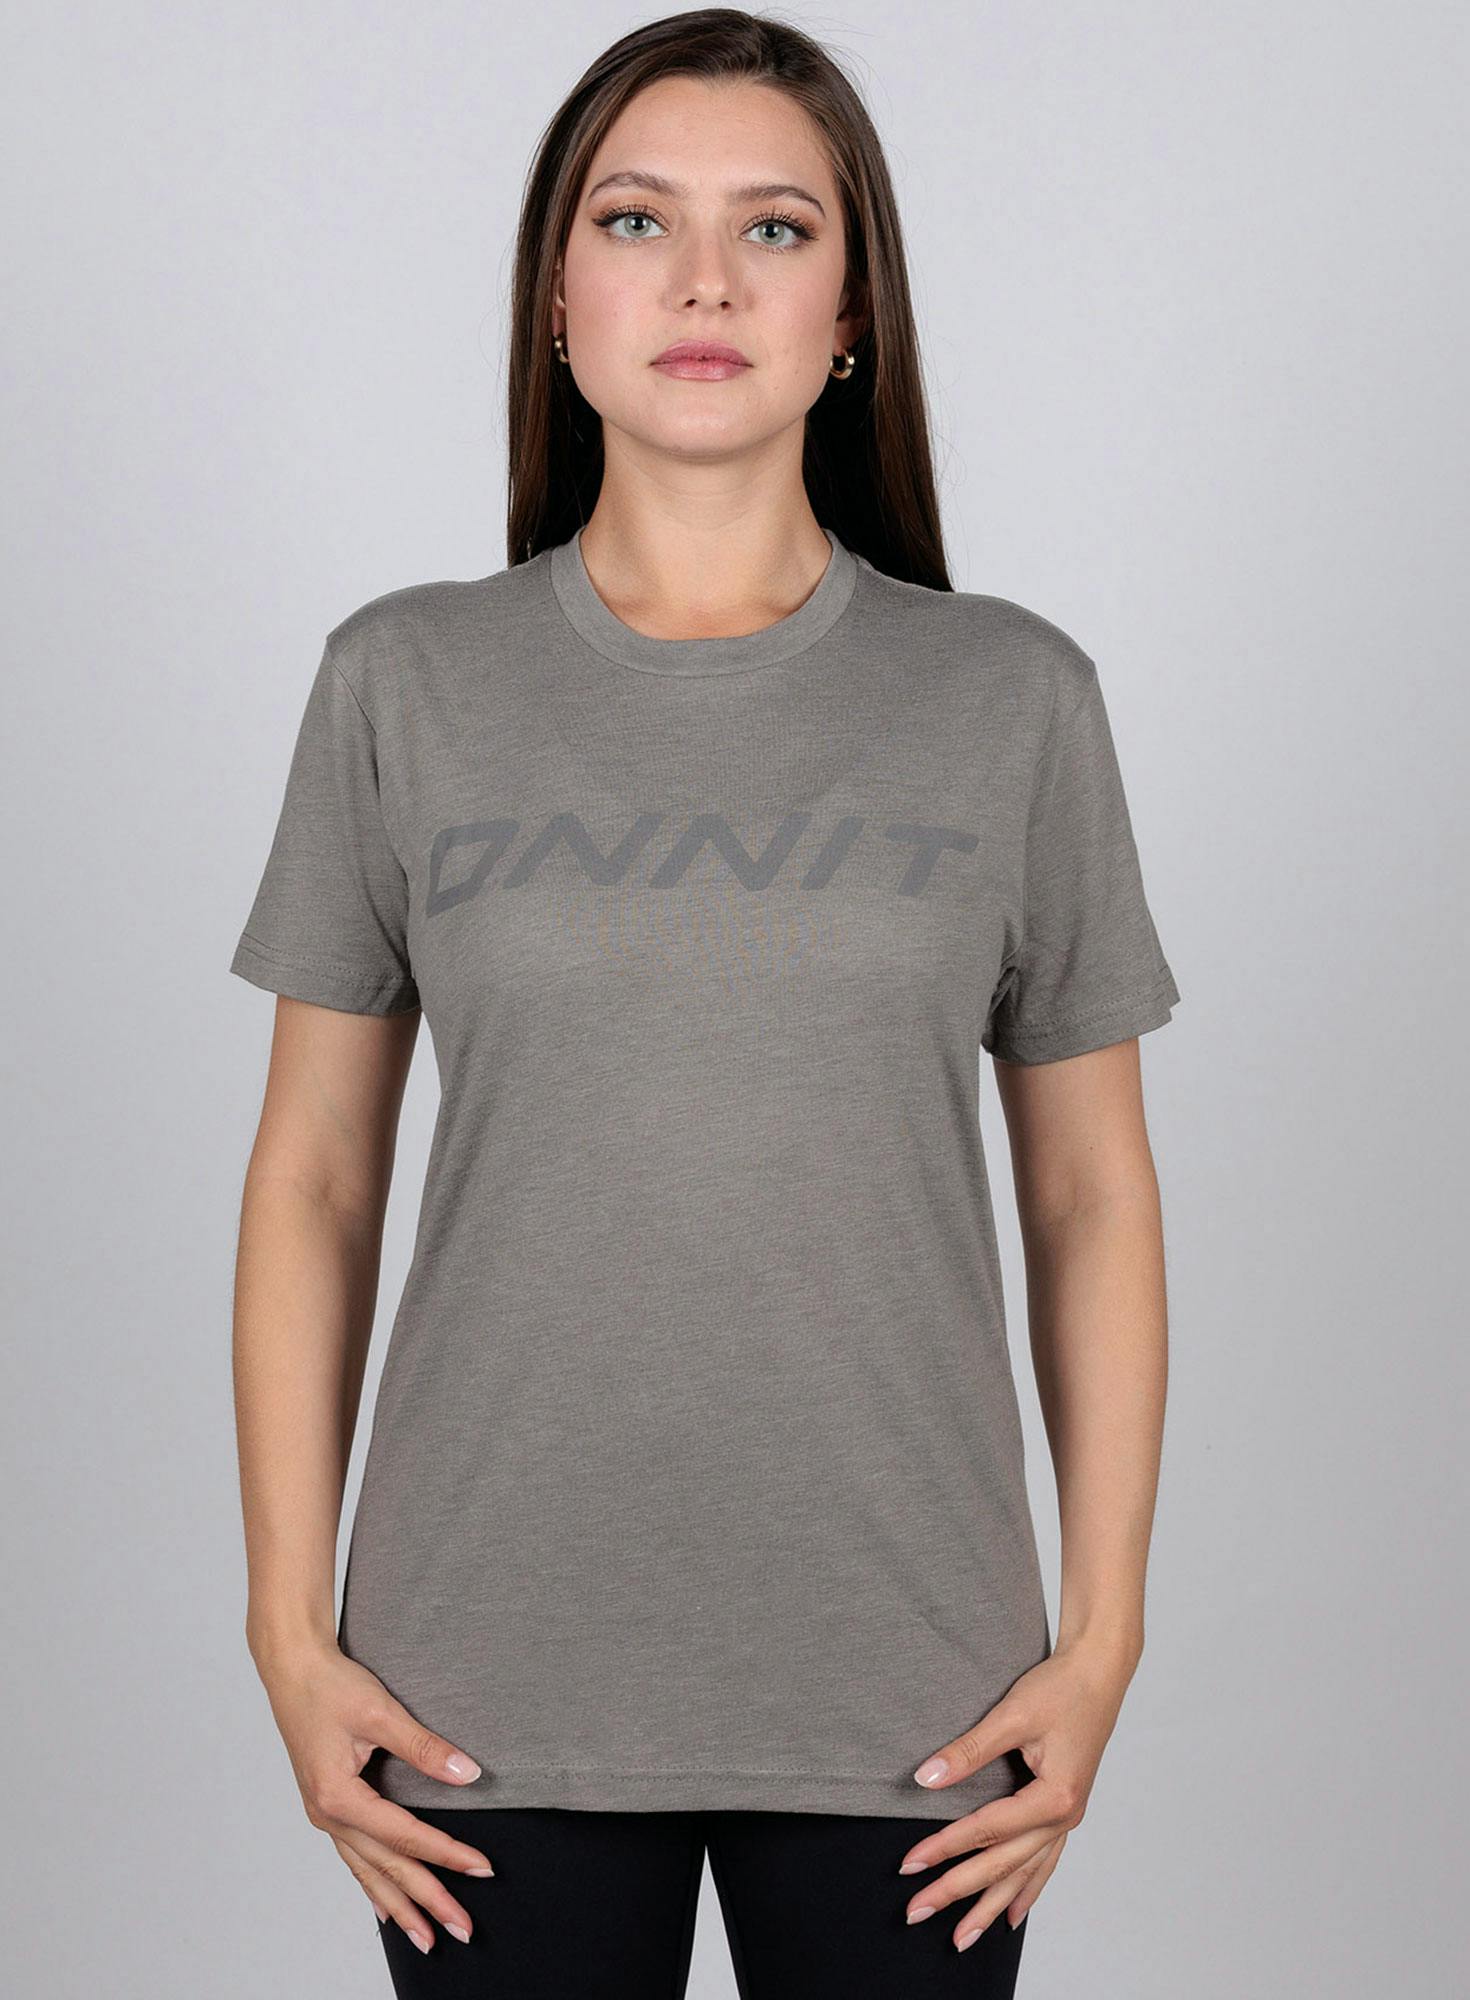 Onnit Type Tri-Blend T-Shirt Bonus Image